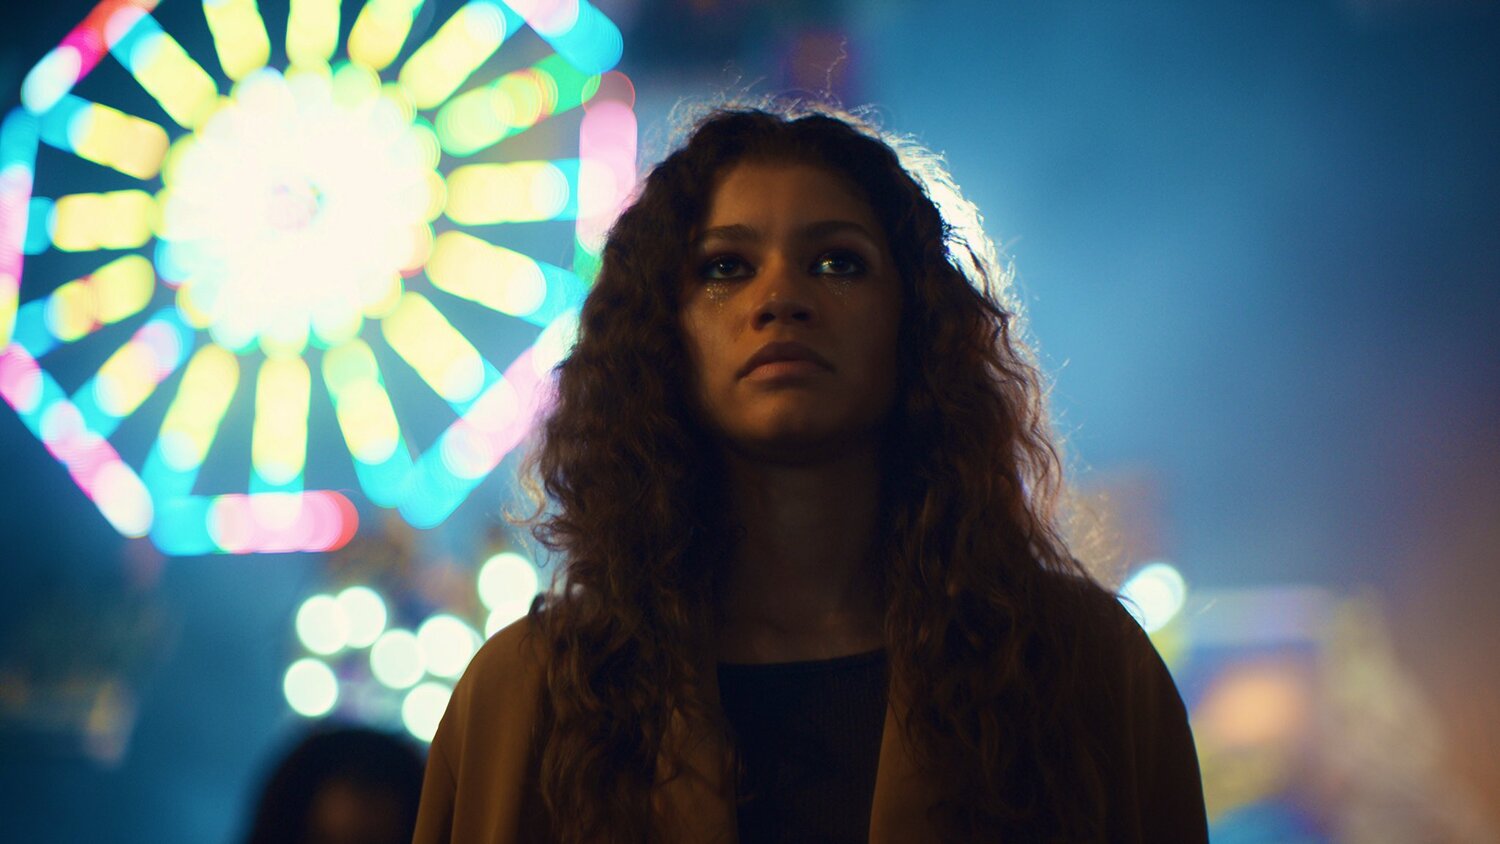 Zendaya as Rue Bennett for HBO’s Euphoria. Photo: HBO